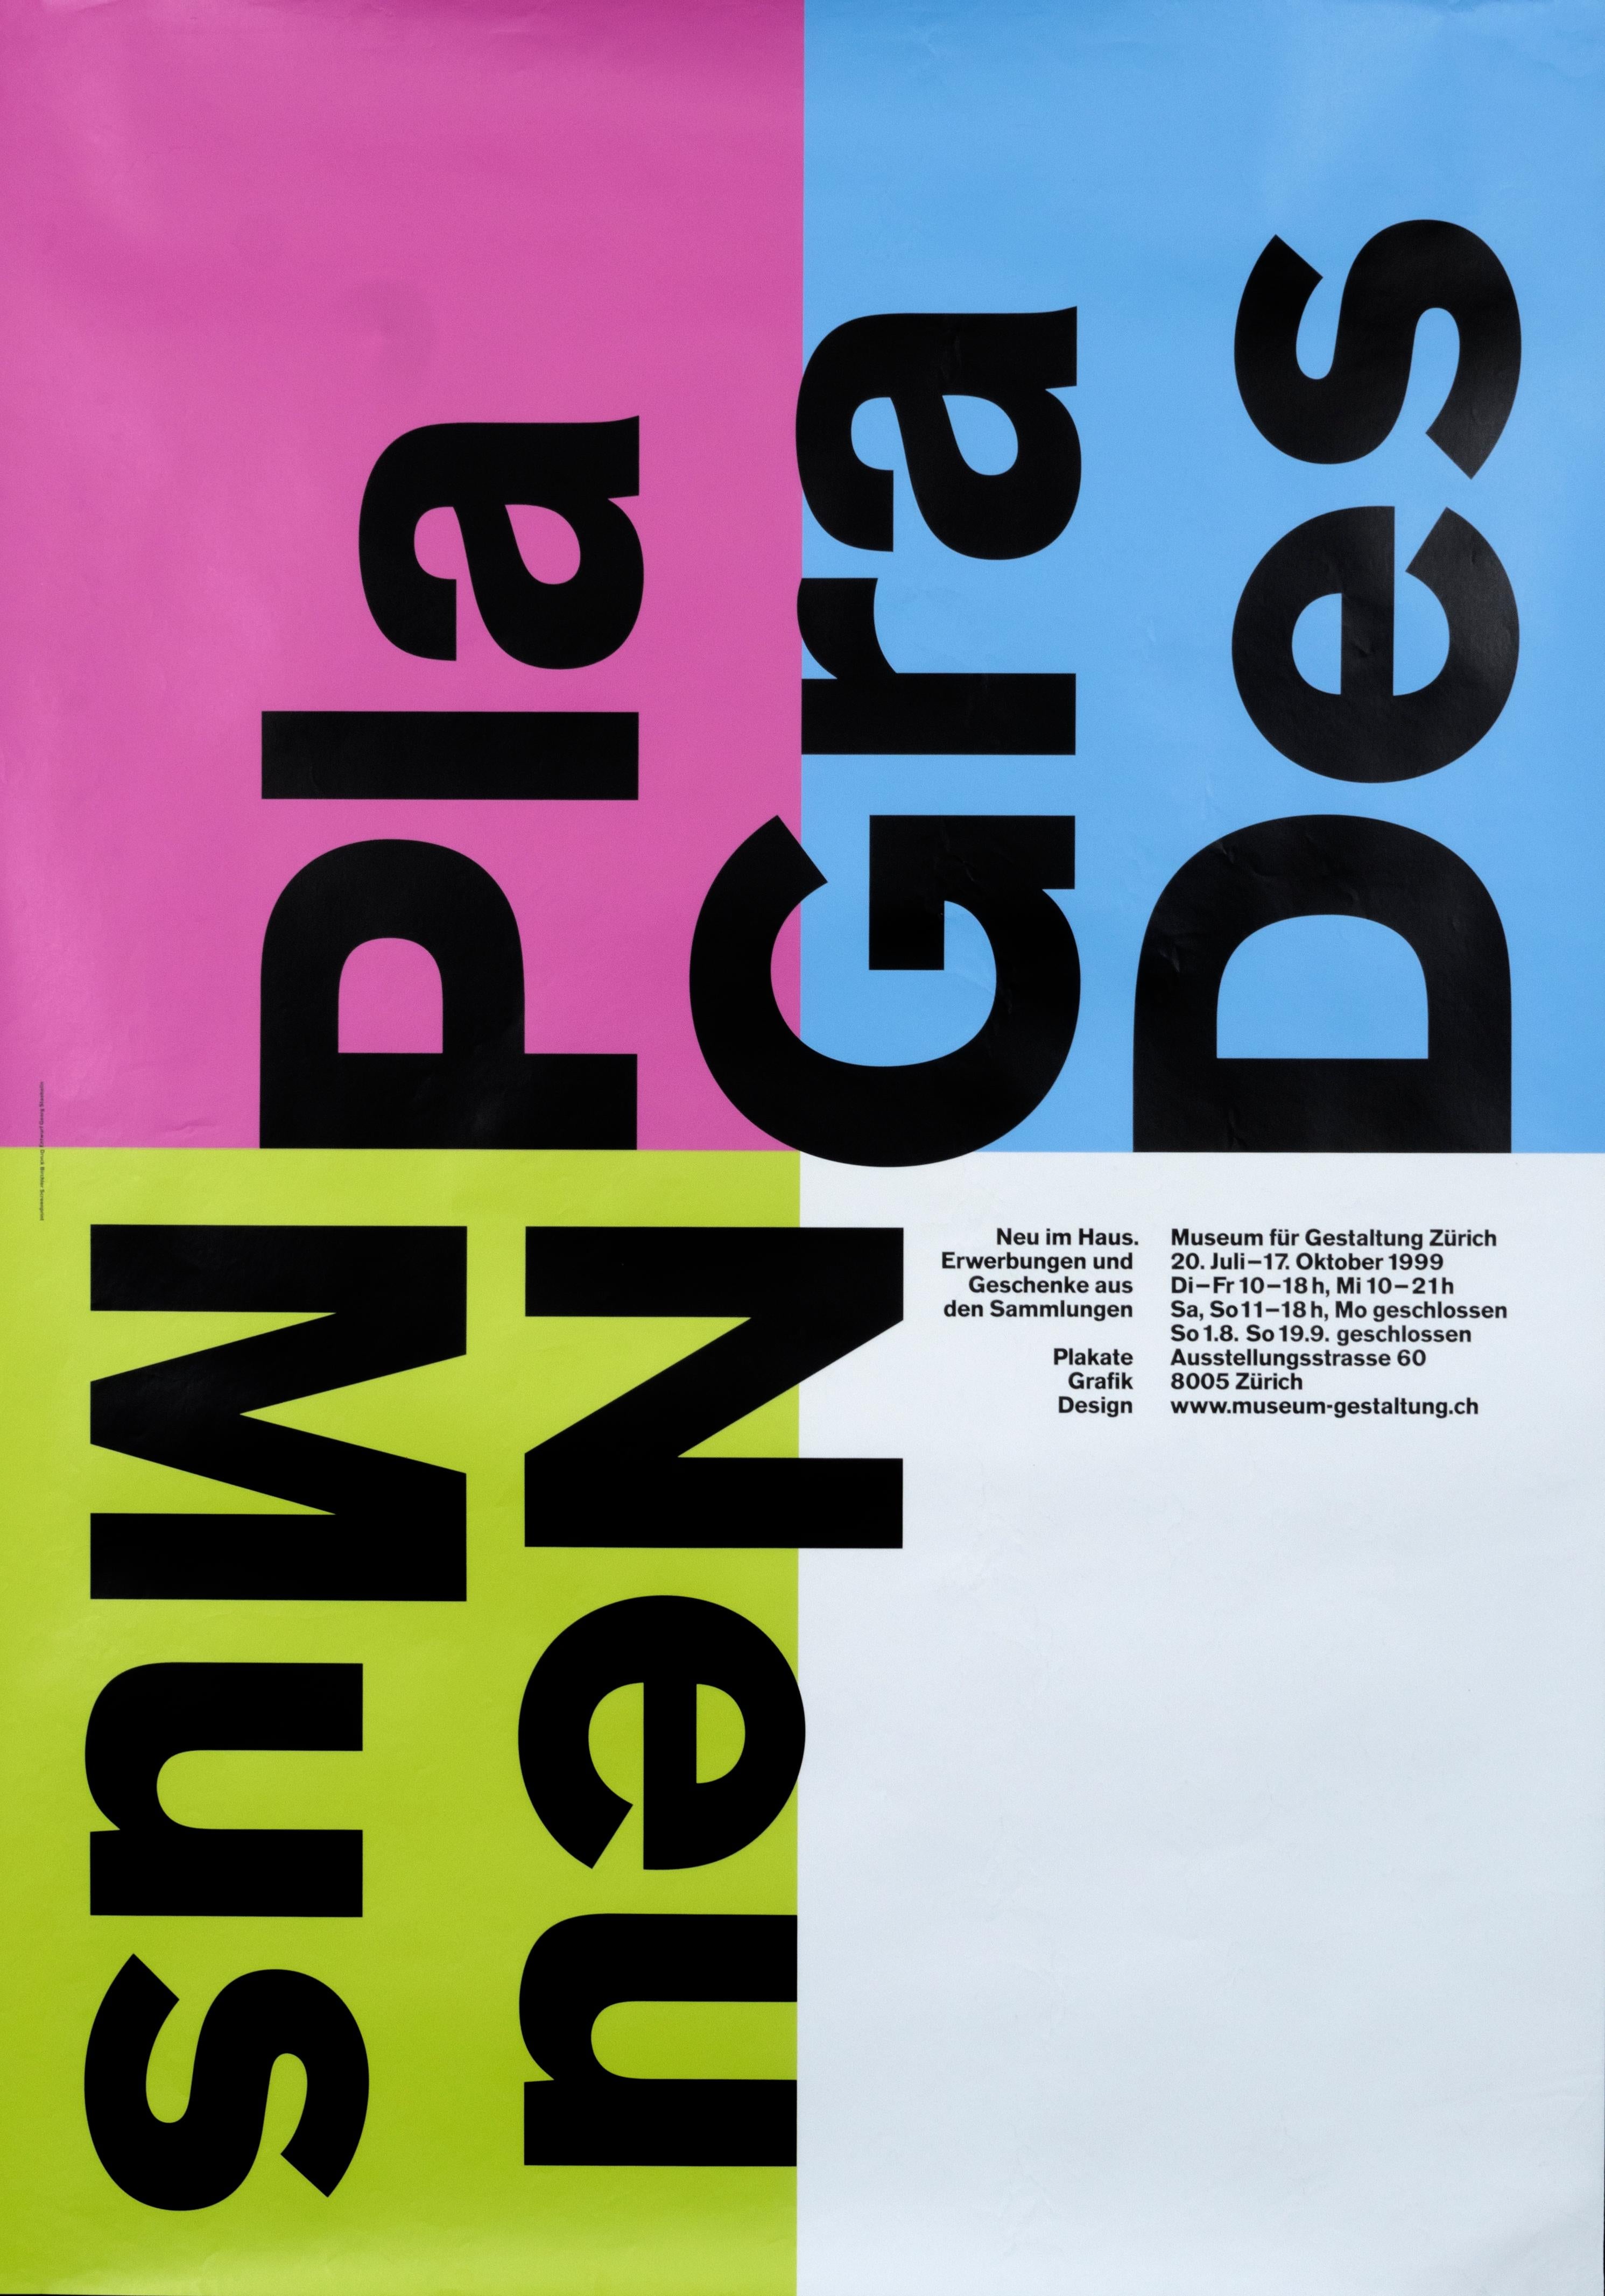 "Neu im Haus - Plakate Grafik Design" Swiss Graphic Design Exhibition Poster - Print by Georg Staehelin